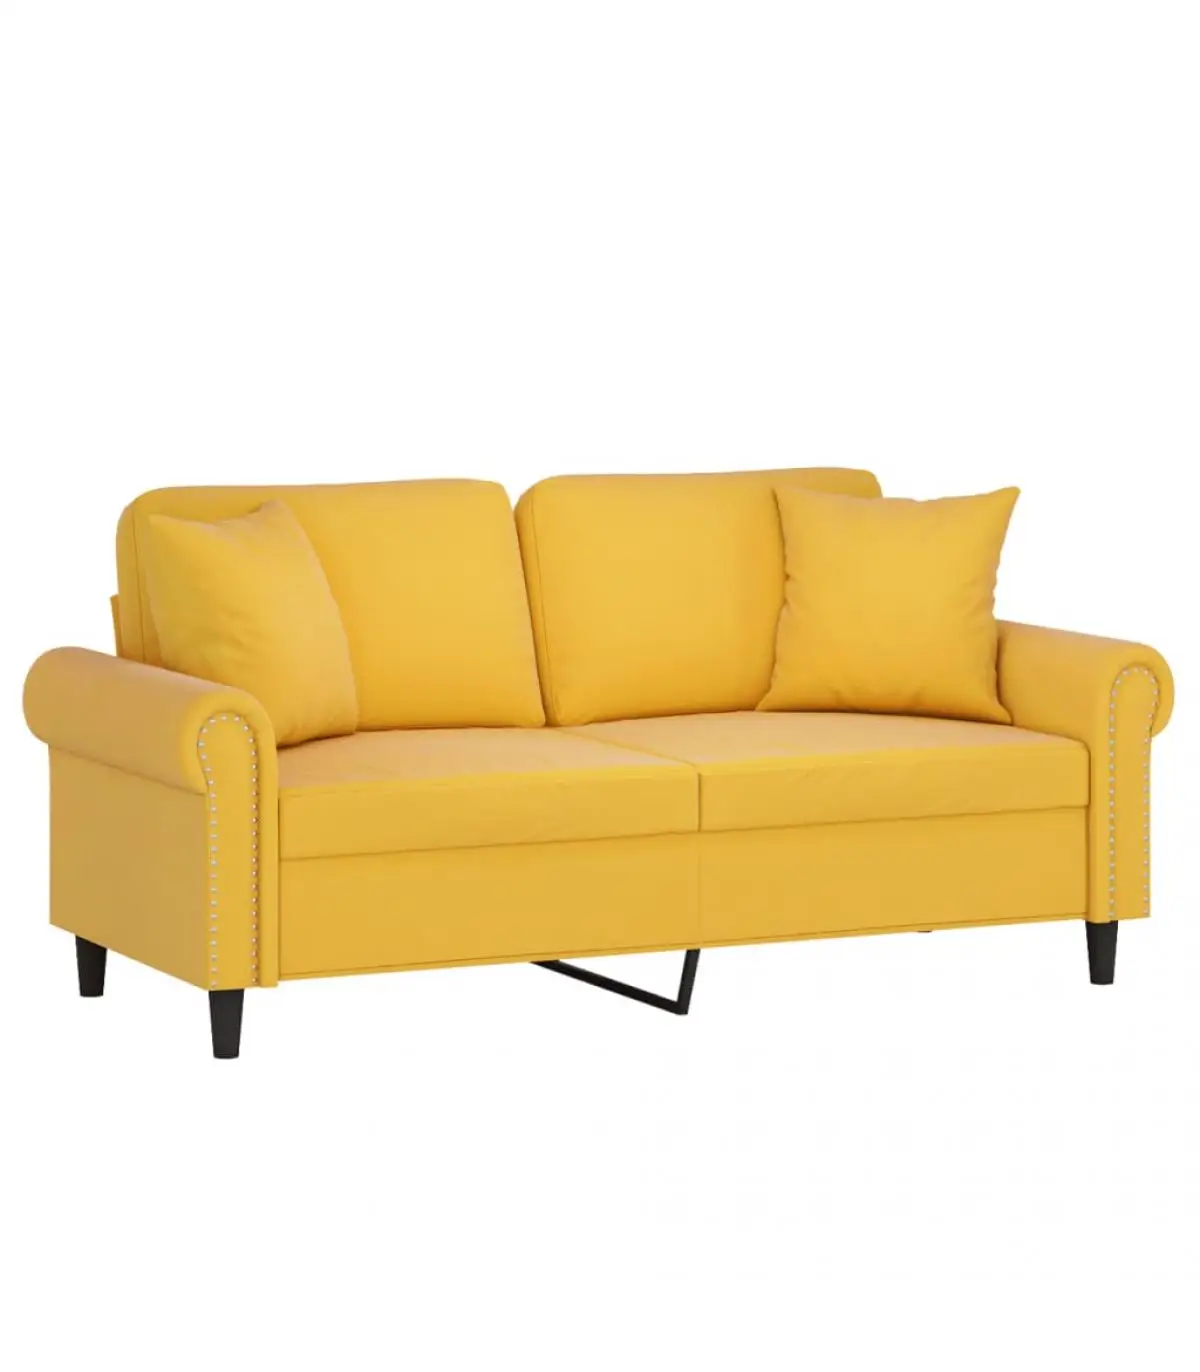 Sofas sofa 2 seats pillows cushions light yellow velvet 140cm - AliExpress